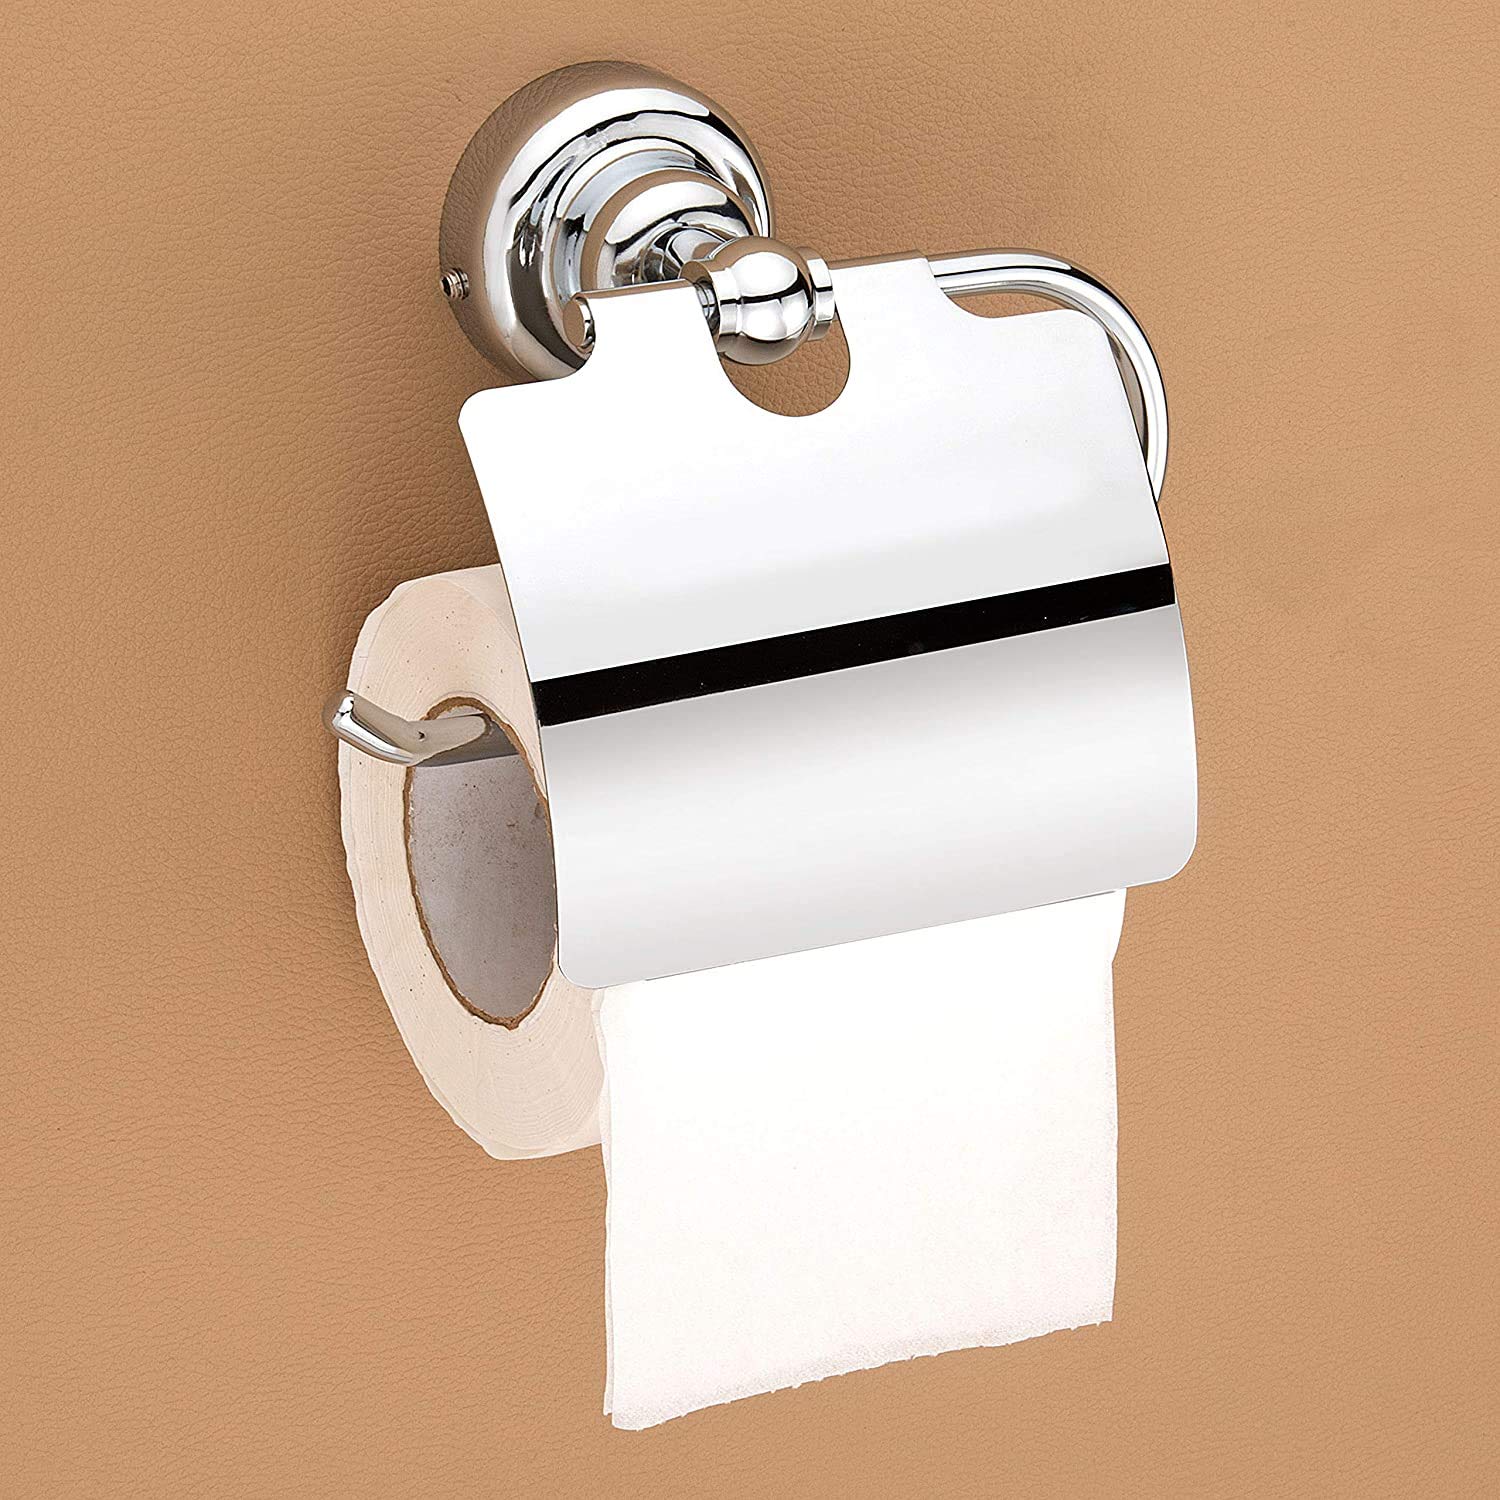 Plantex Platinum Stainless Steel 304 Grade Skyllo Toilet Paper Roll Holder/Toilet Paper Holder in Bathroom/Kitchen/Bathroom Accessories(Chrome) - Pack of 4